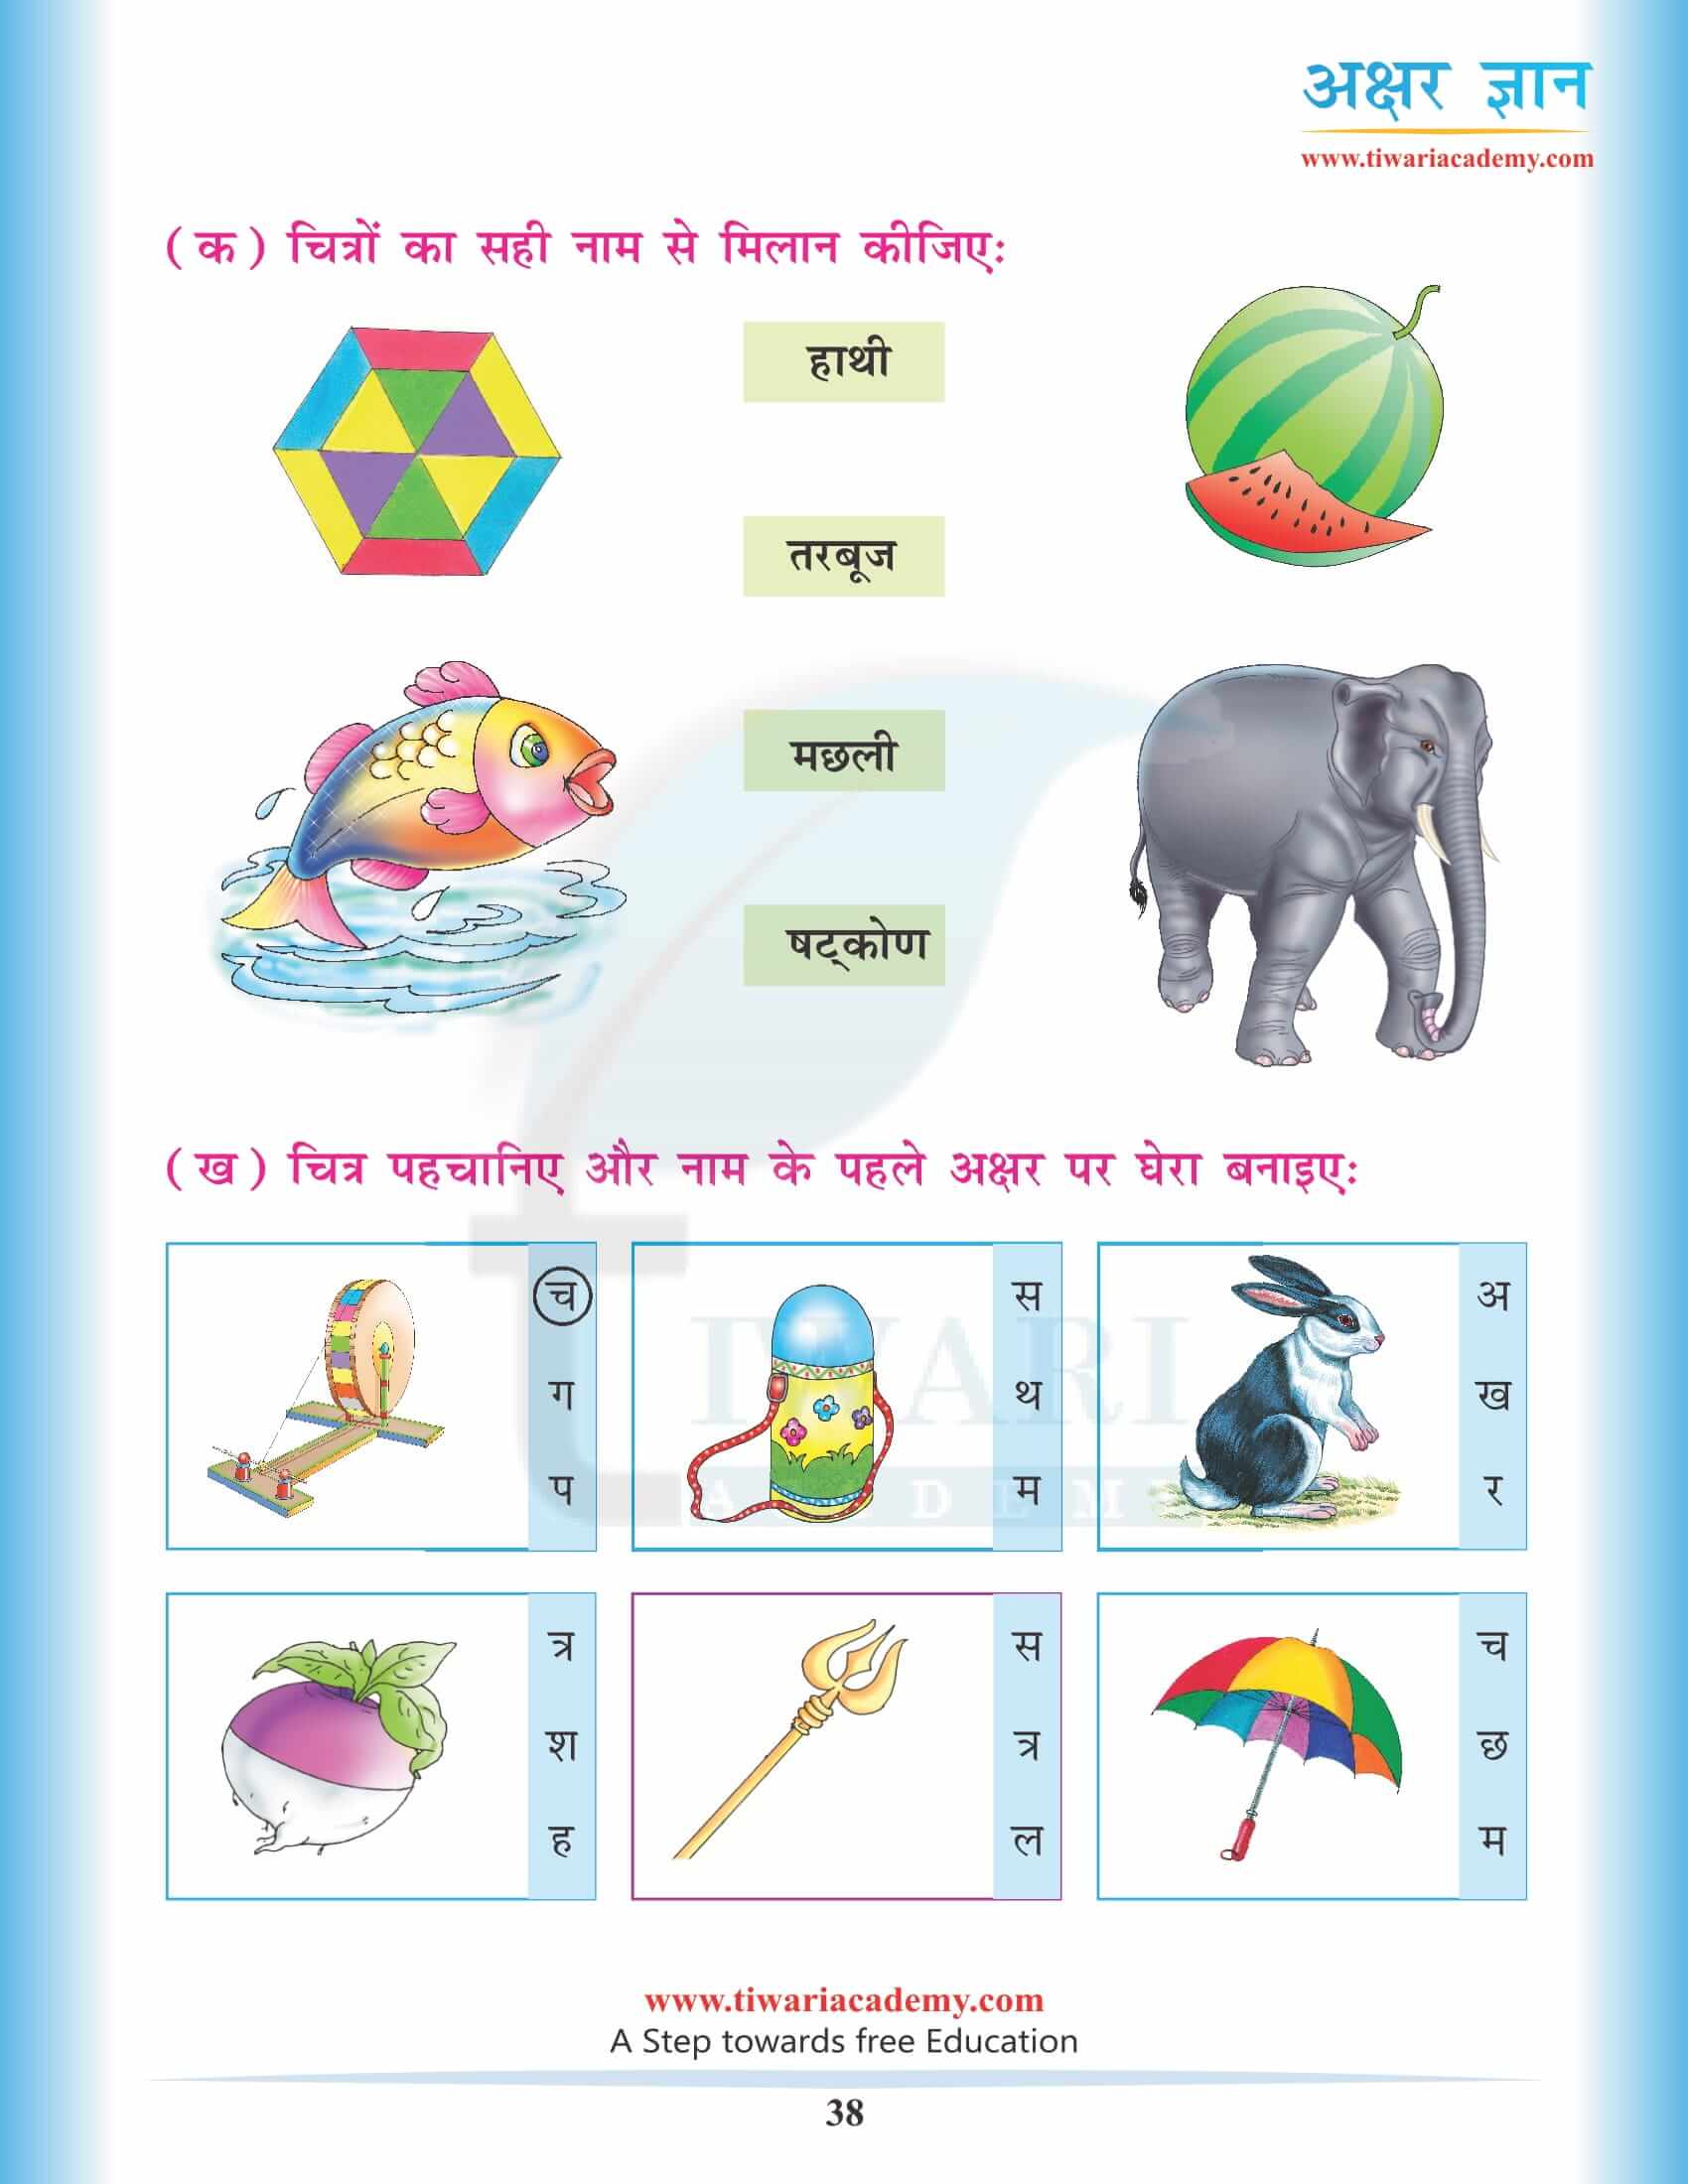 Hindi Alphabets questions